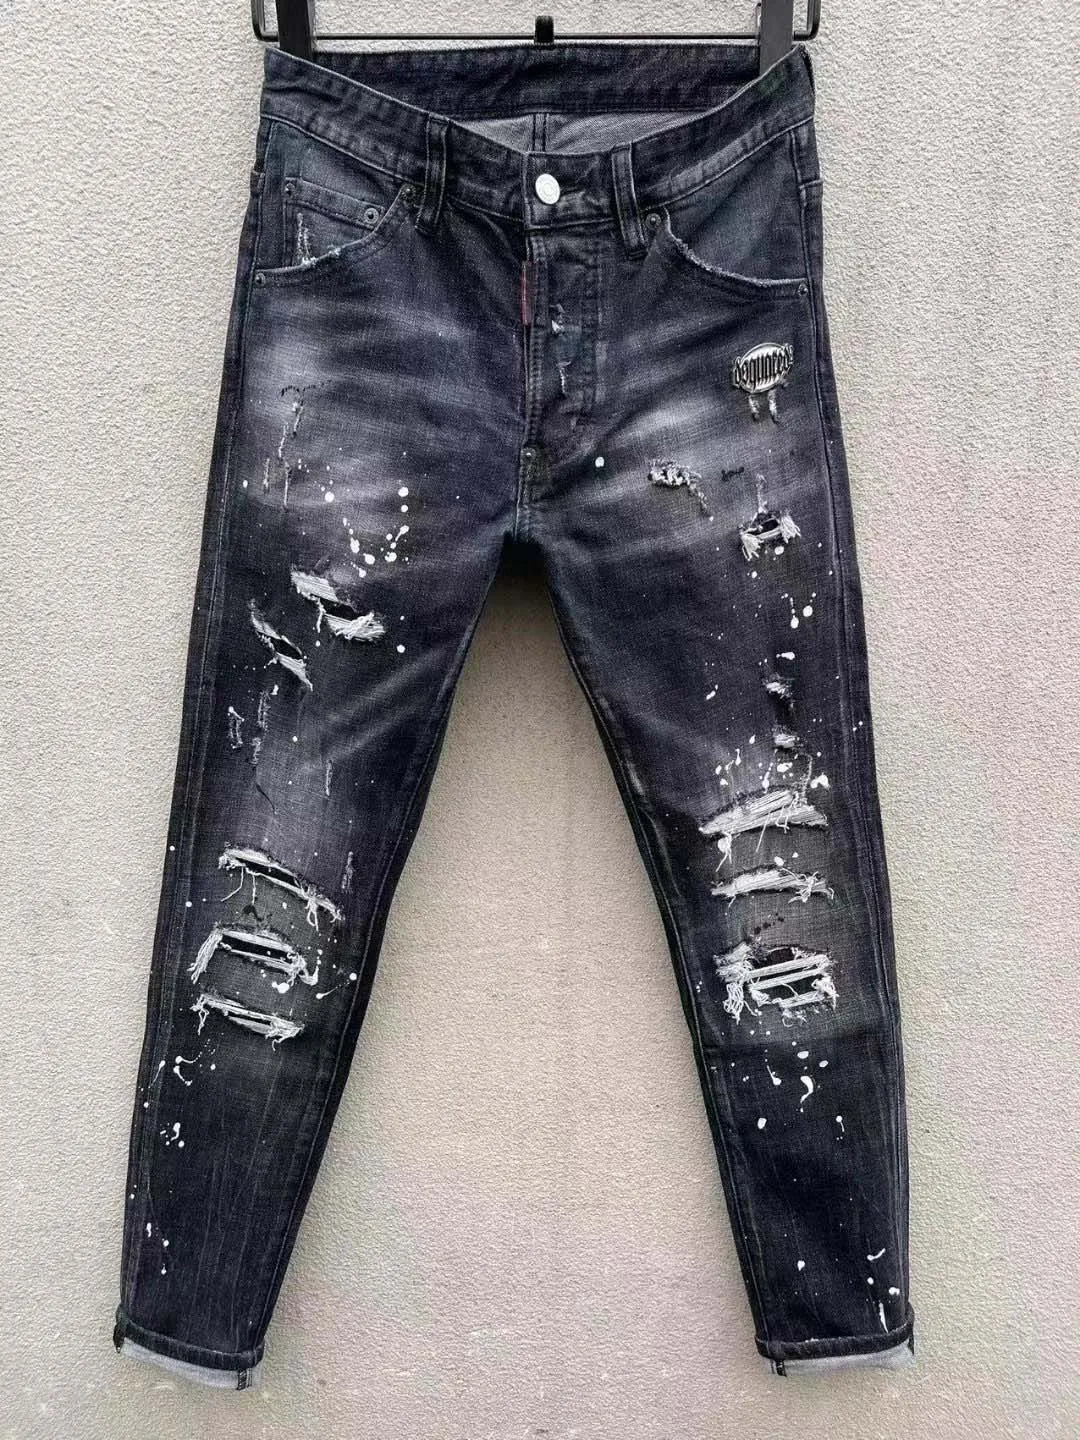 Designer Men's Jeans Men's Fashion Slim Fit Washed Motocycle Denim Pants Panelled Hip HOP Trousers